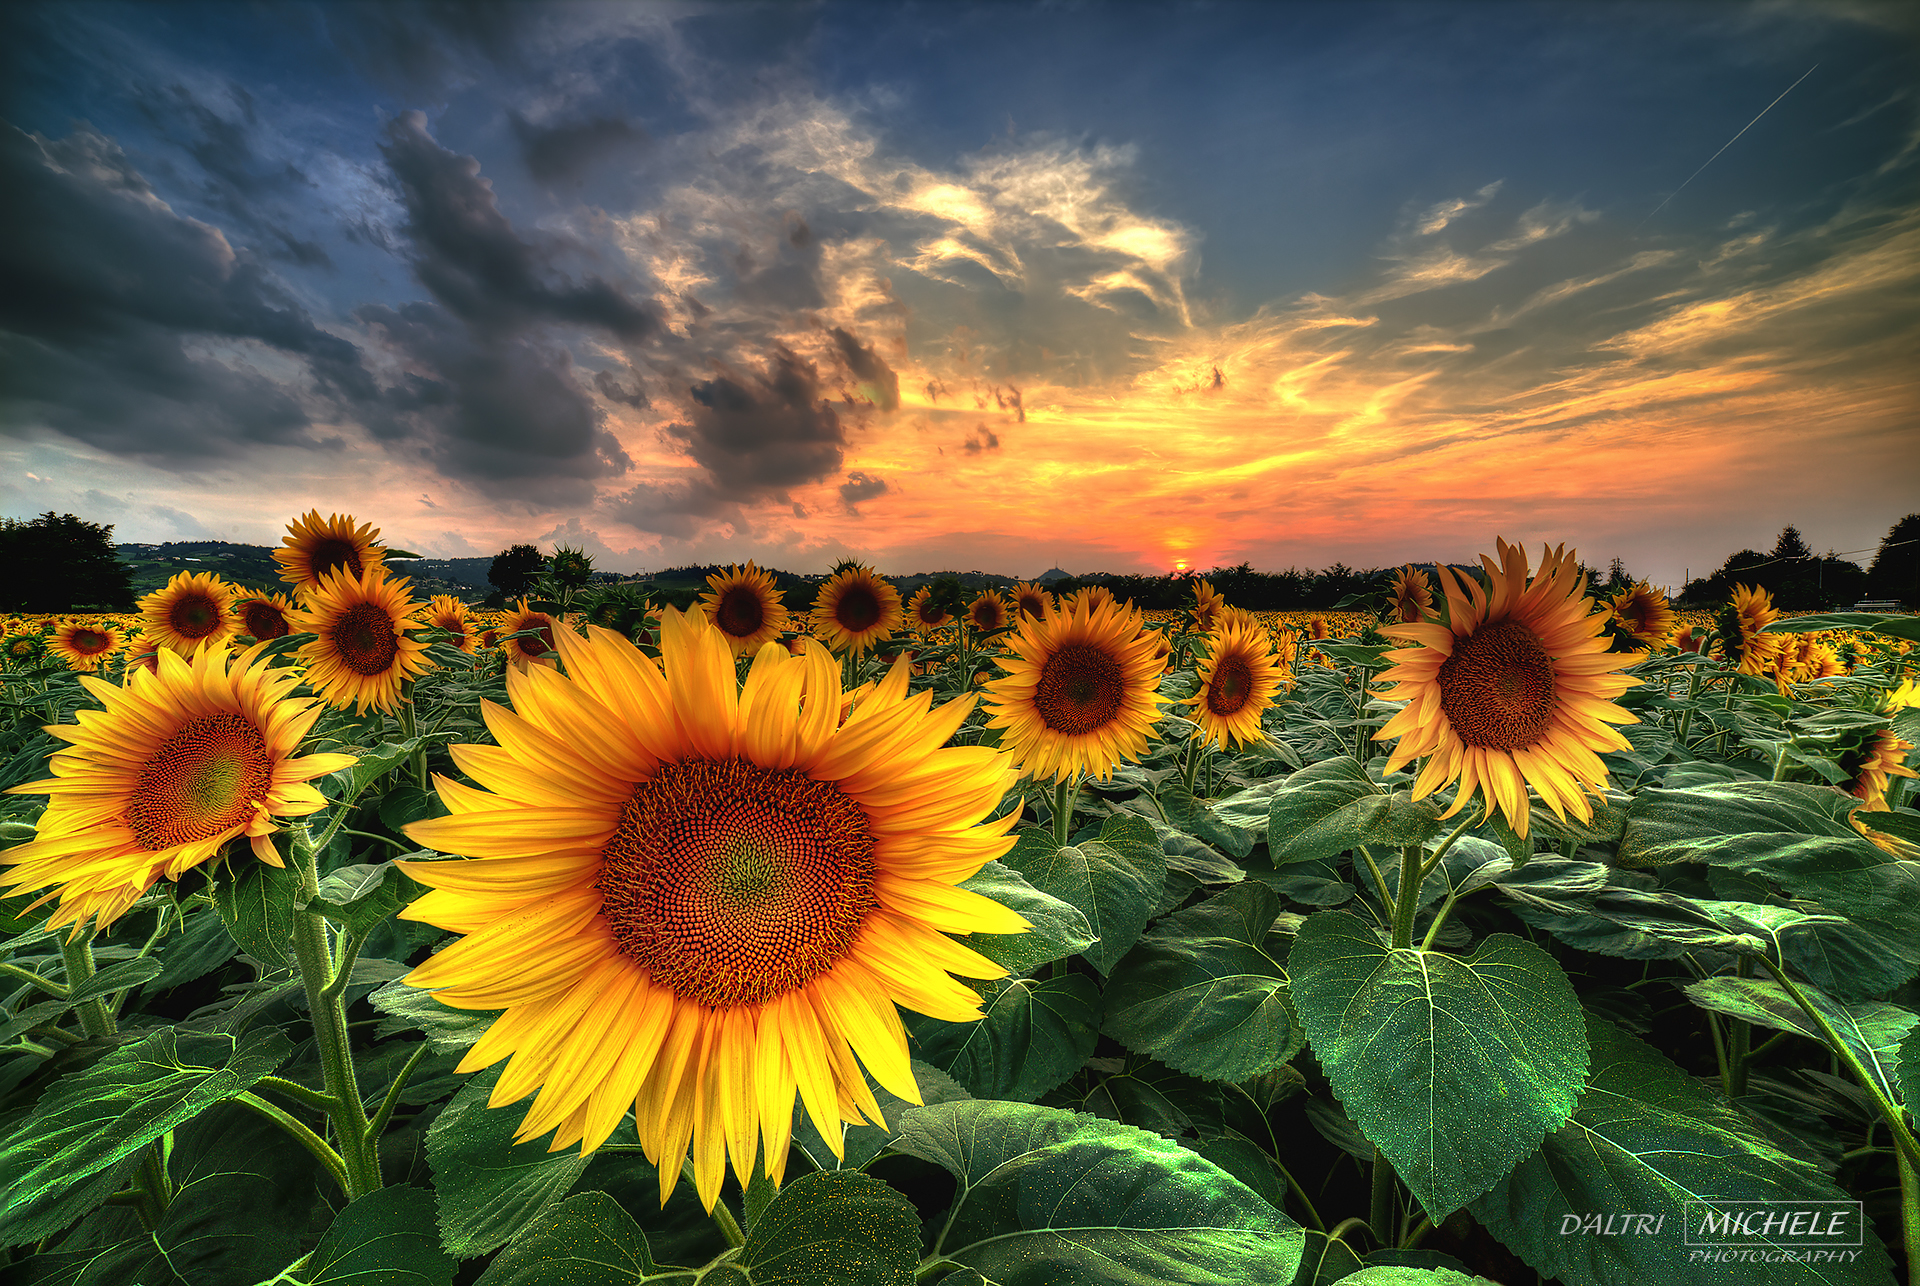 Sunflowers, a flower I love ......